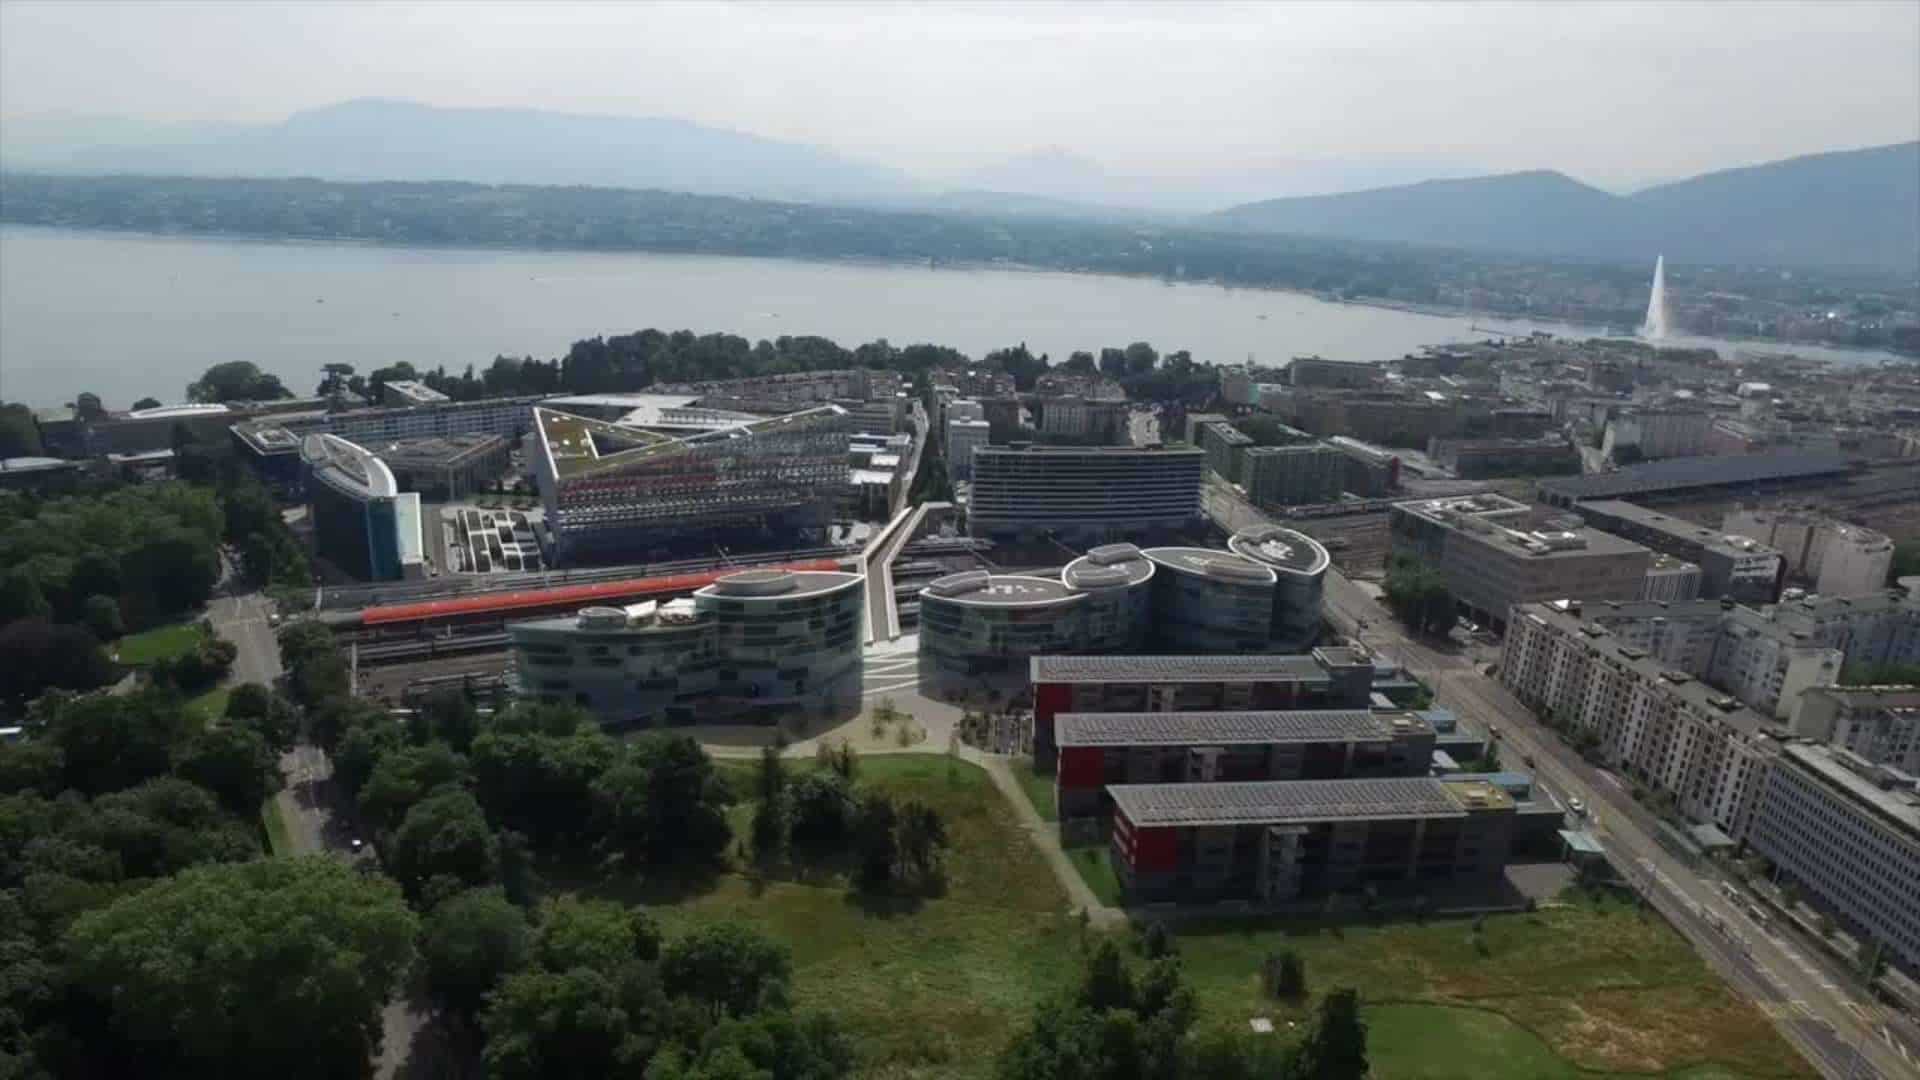 Maison de la Paix view of Geneva Lake